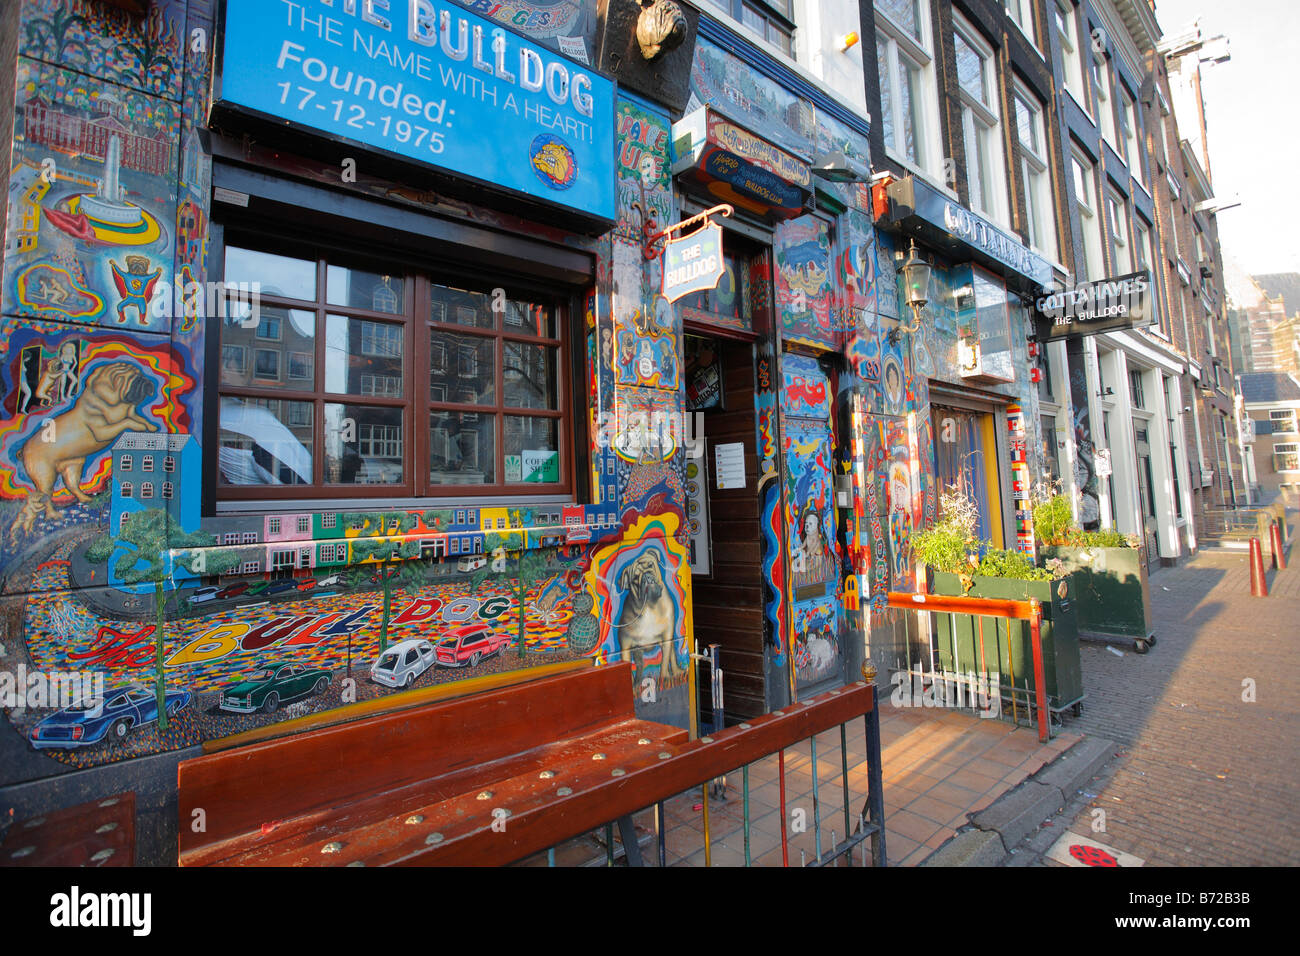 Entrance to the bar 'Bulldog', Amsterdam, Netherlands Stock Photo